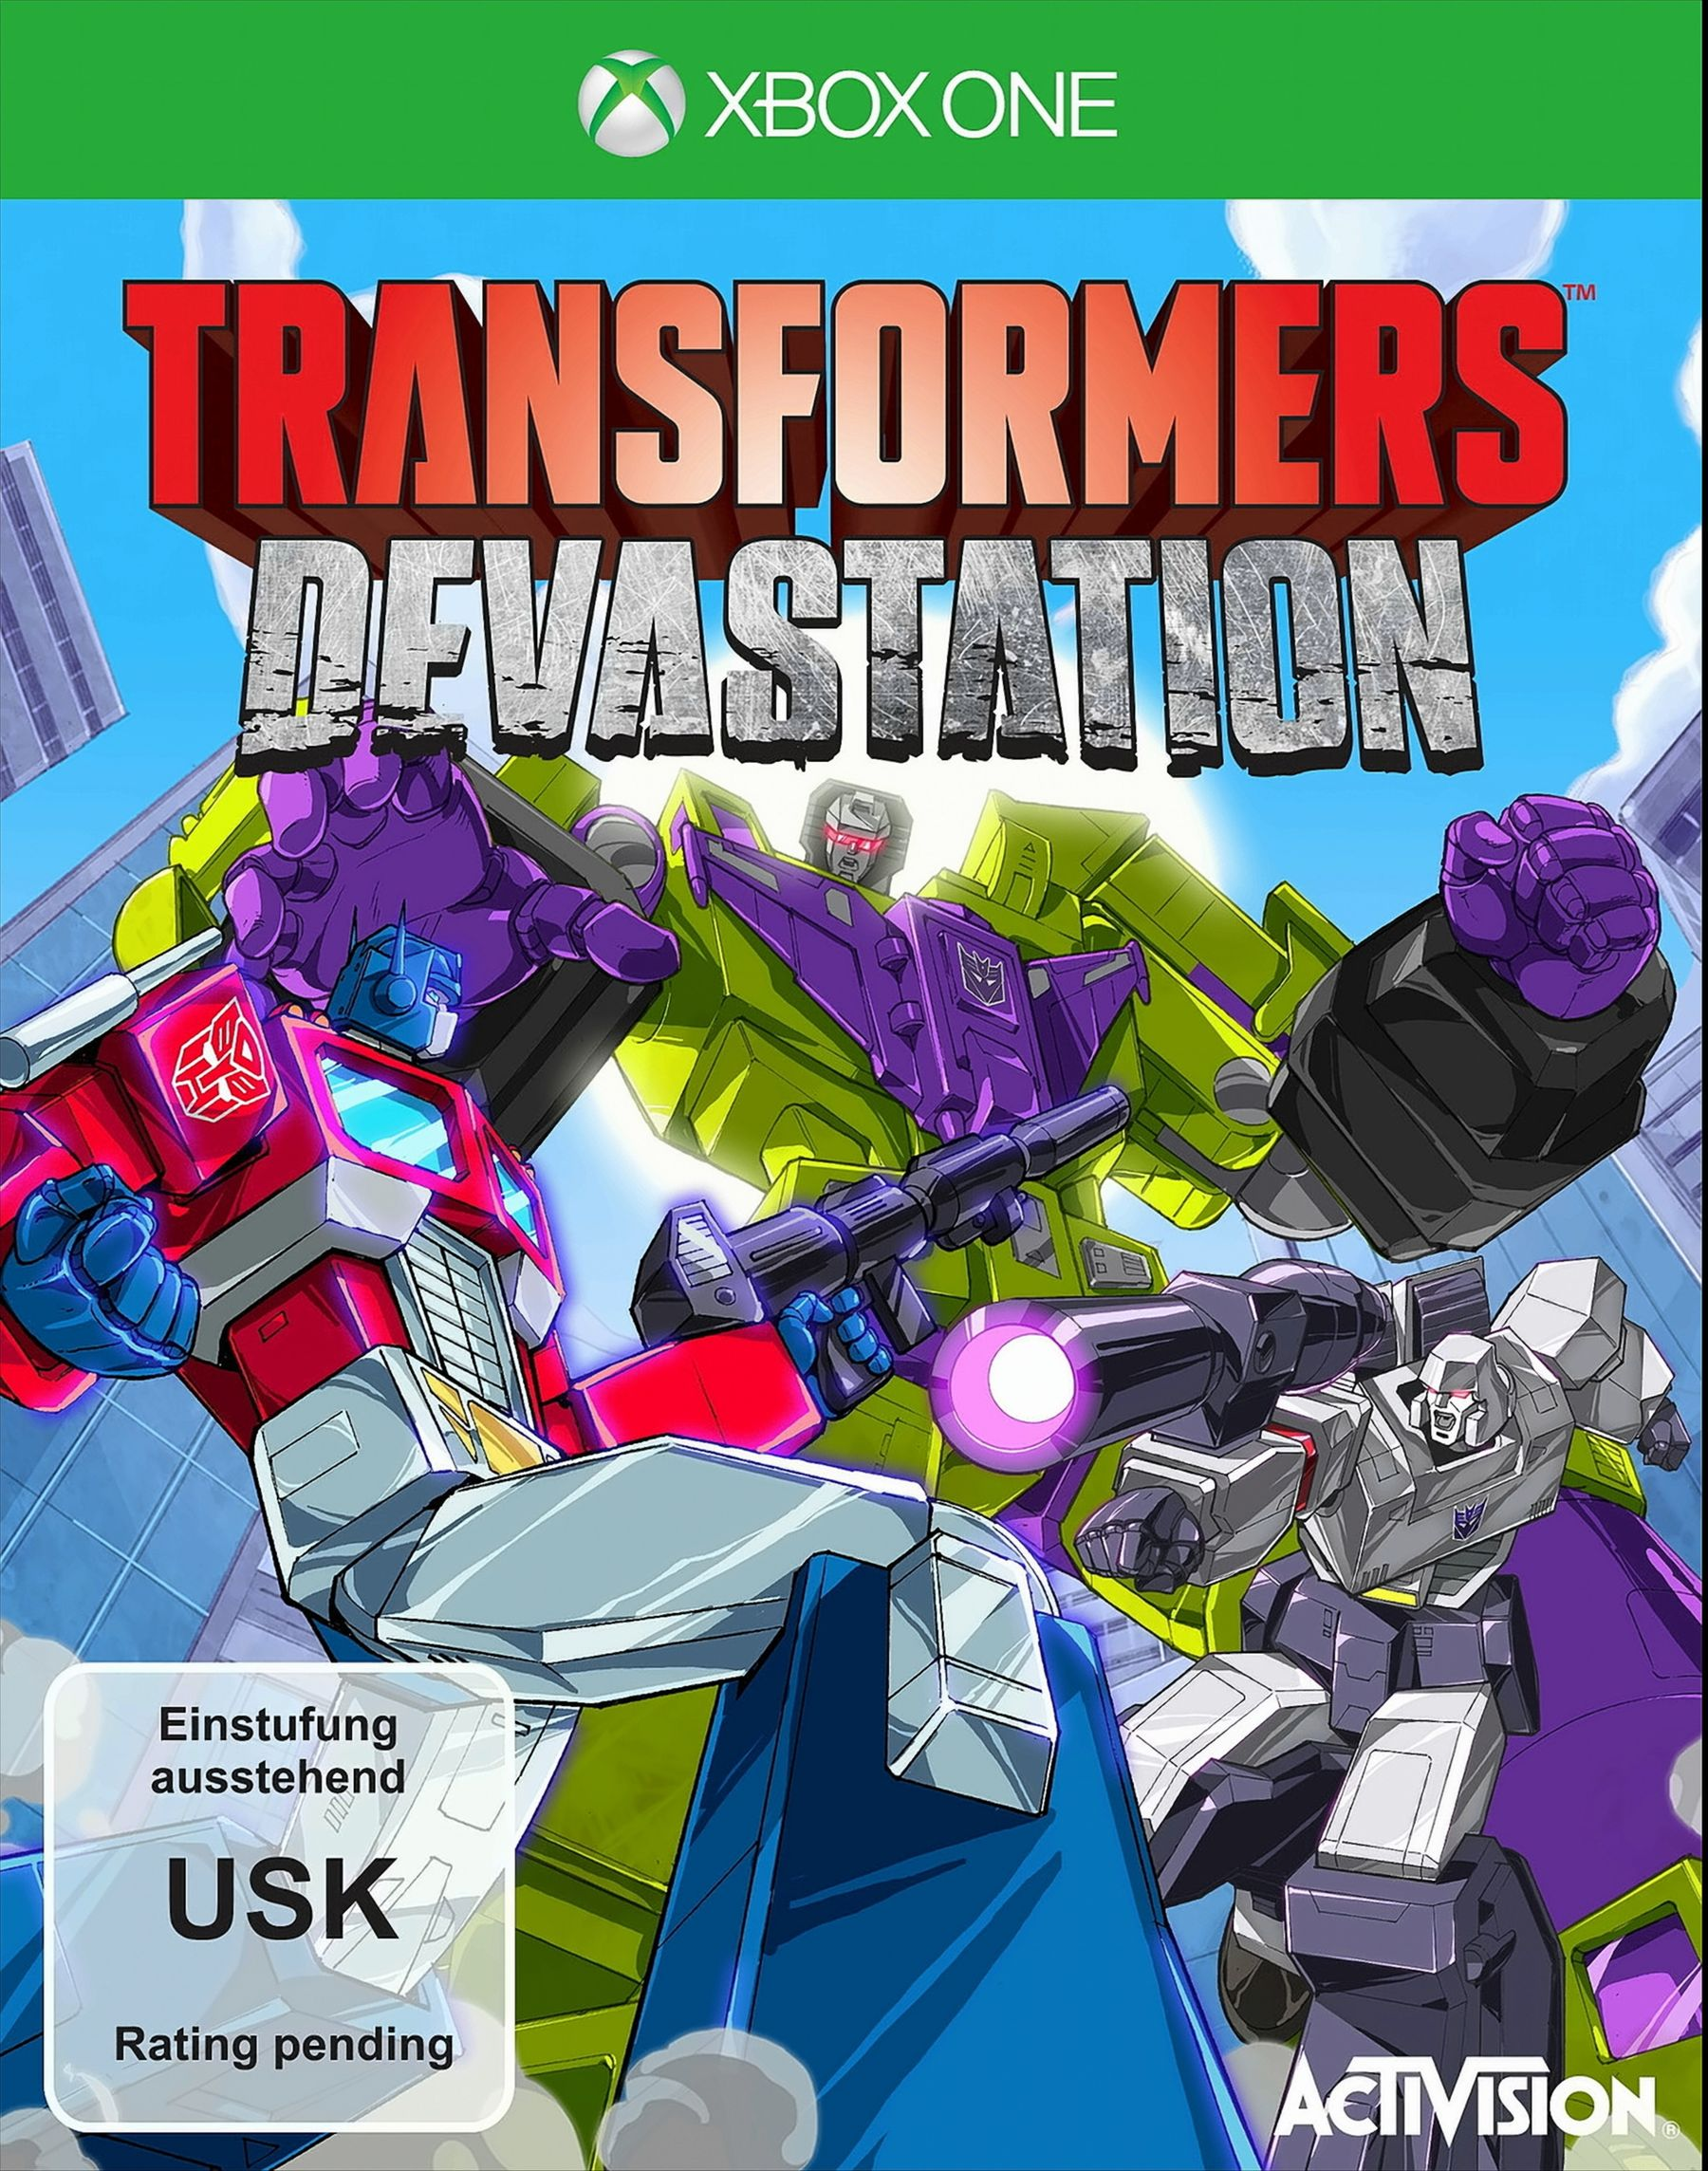 Transformers: - Devastation [Xbox One]